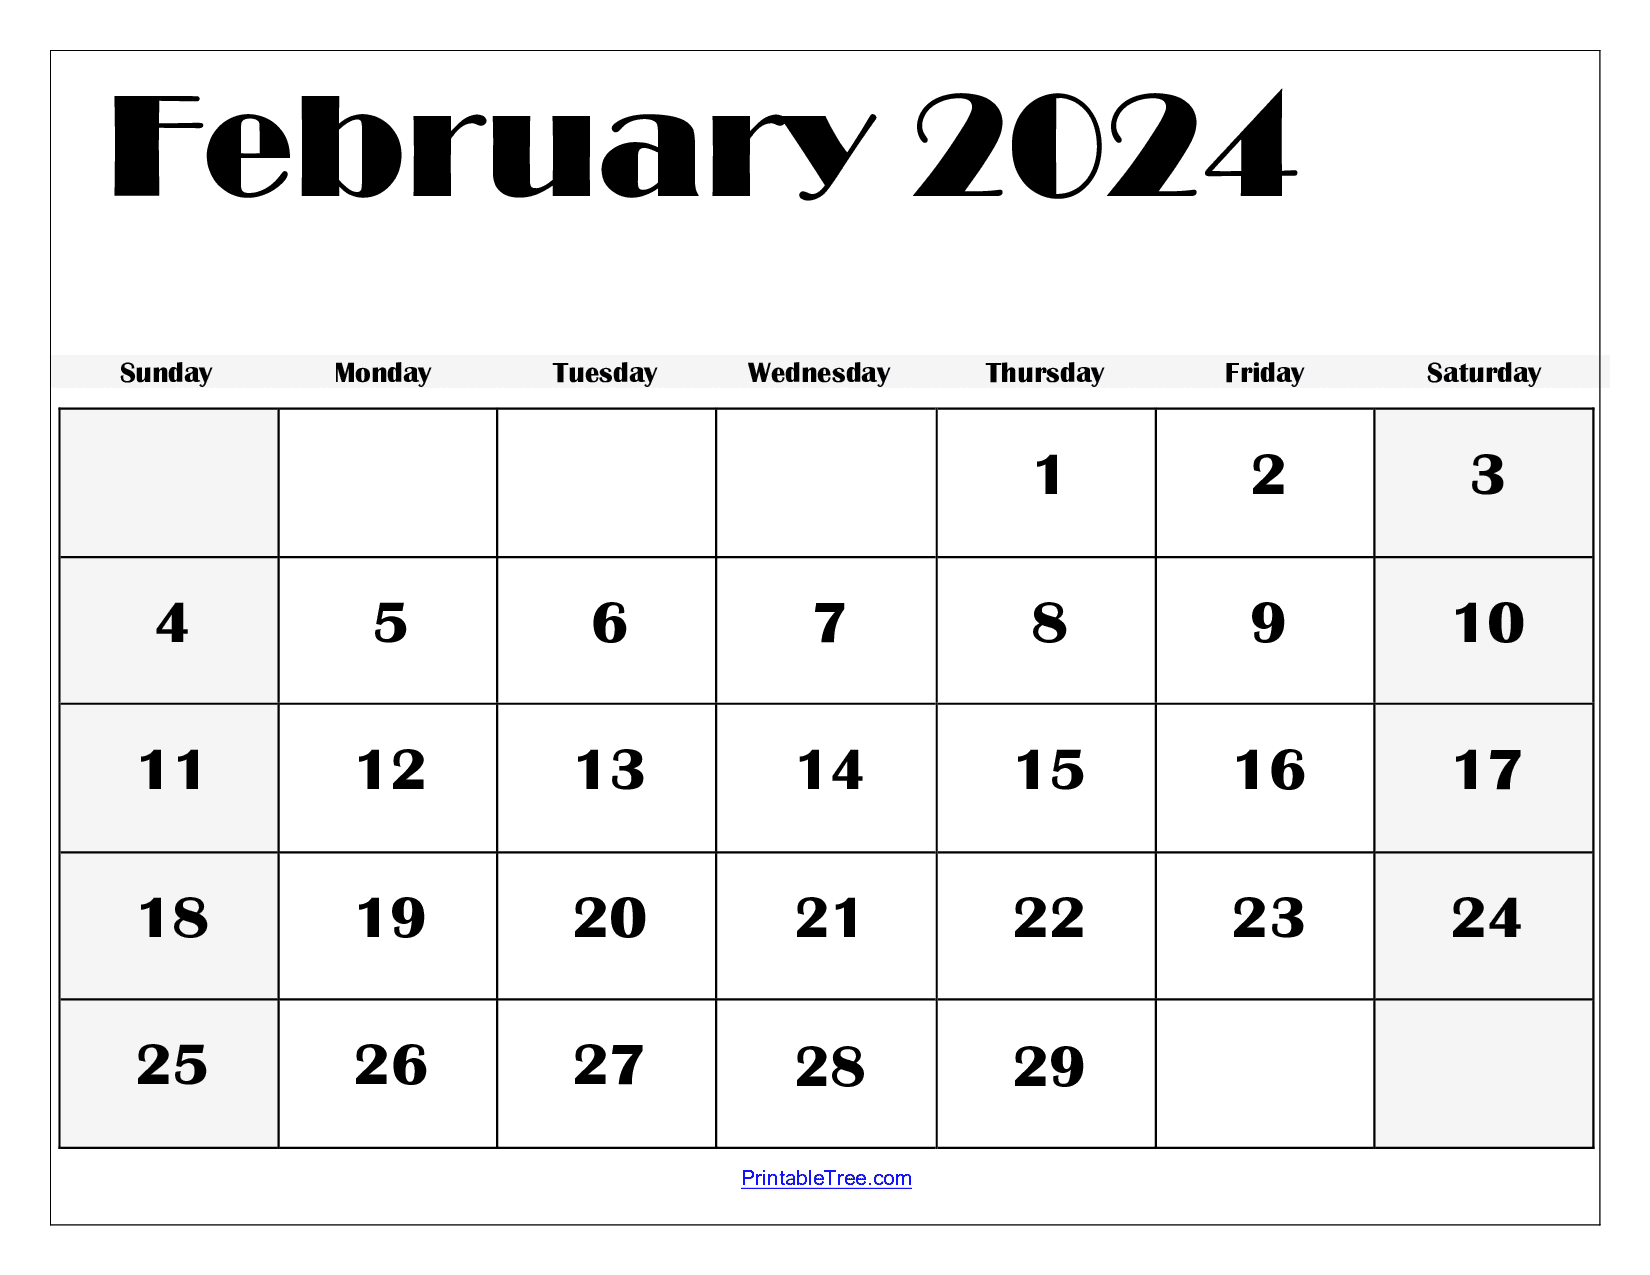 February 2024 Calendar Printable Pdf Template With Holidays for 2024 February Calendar Printable Free